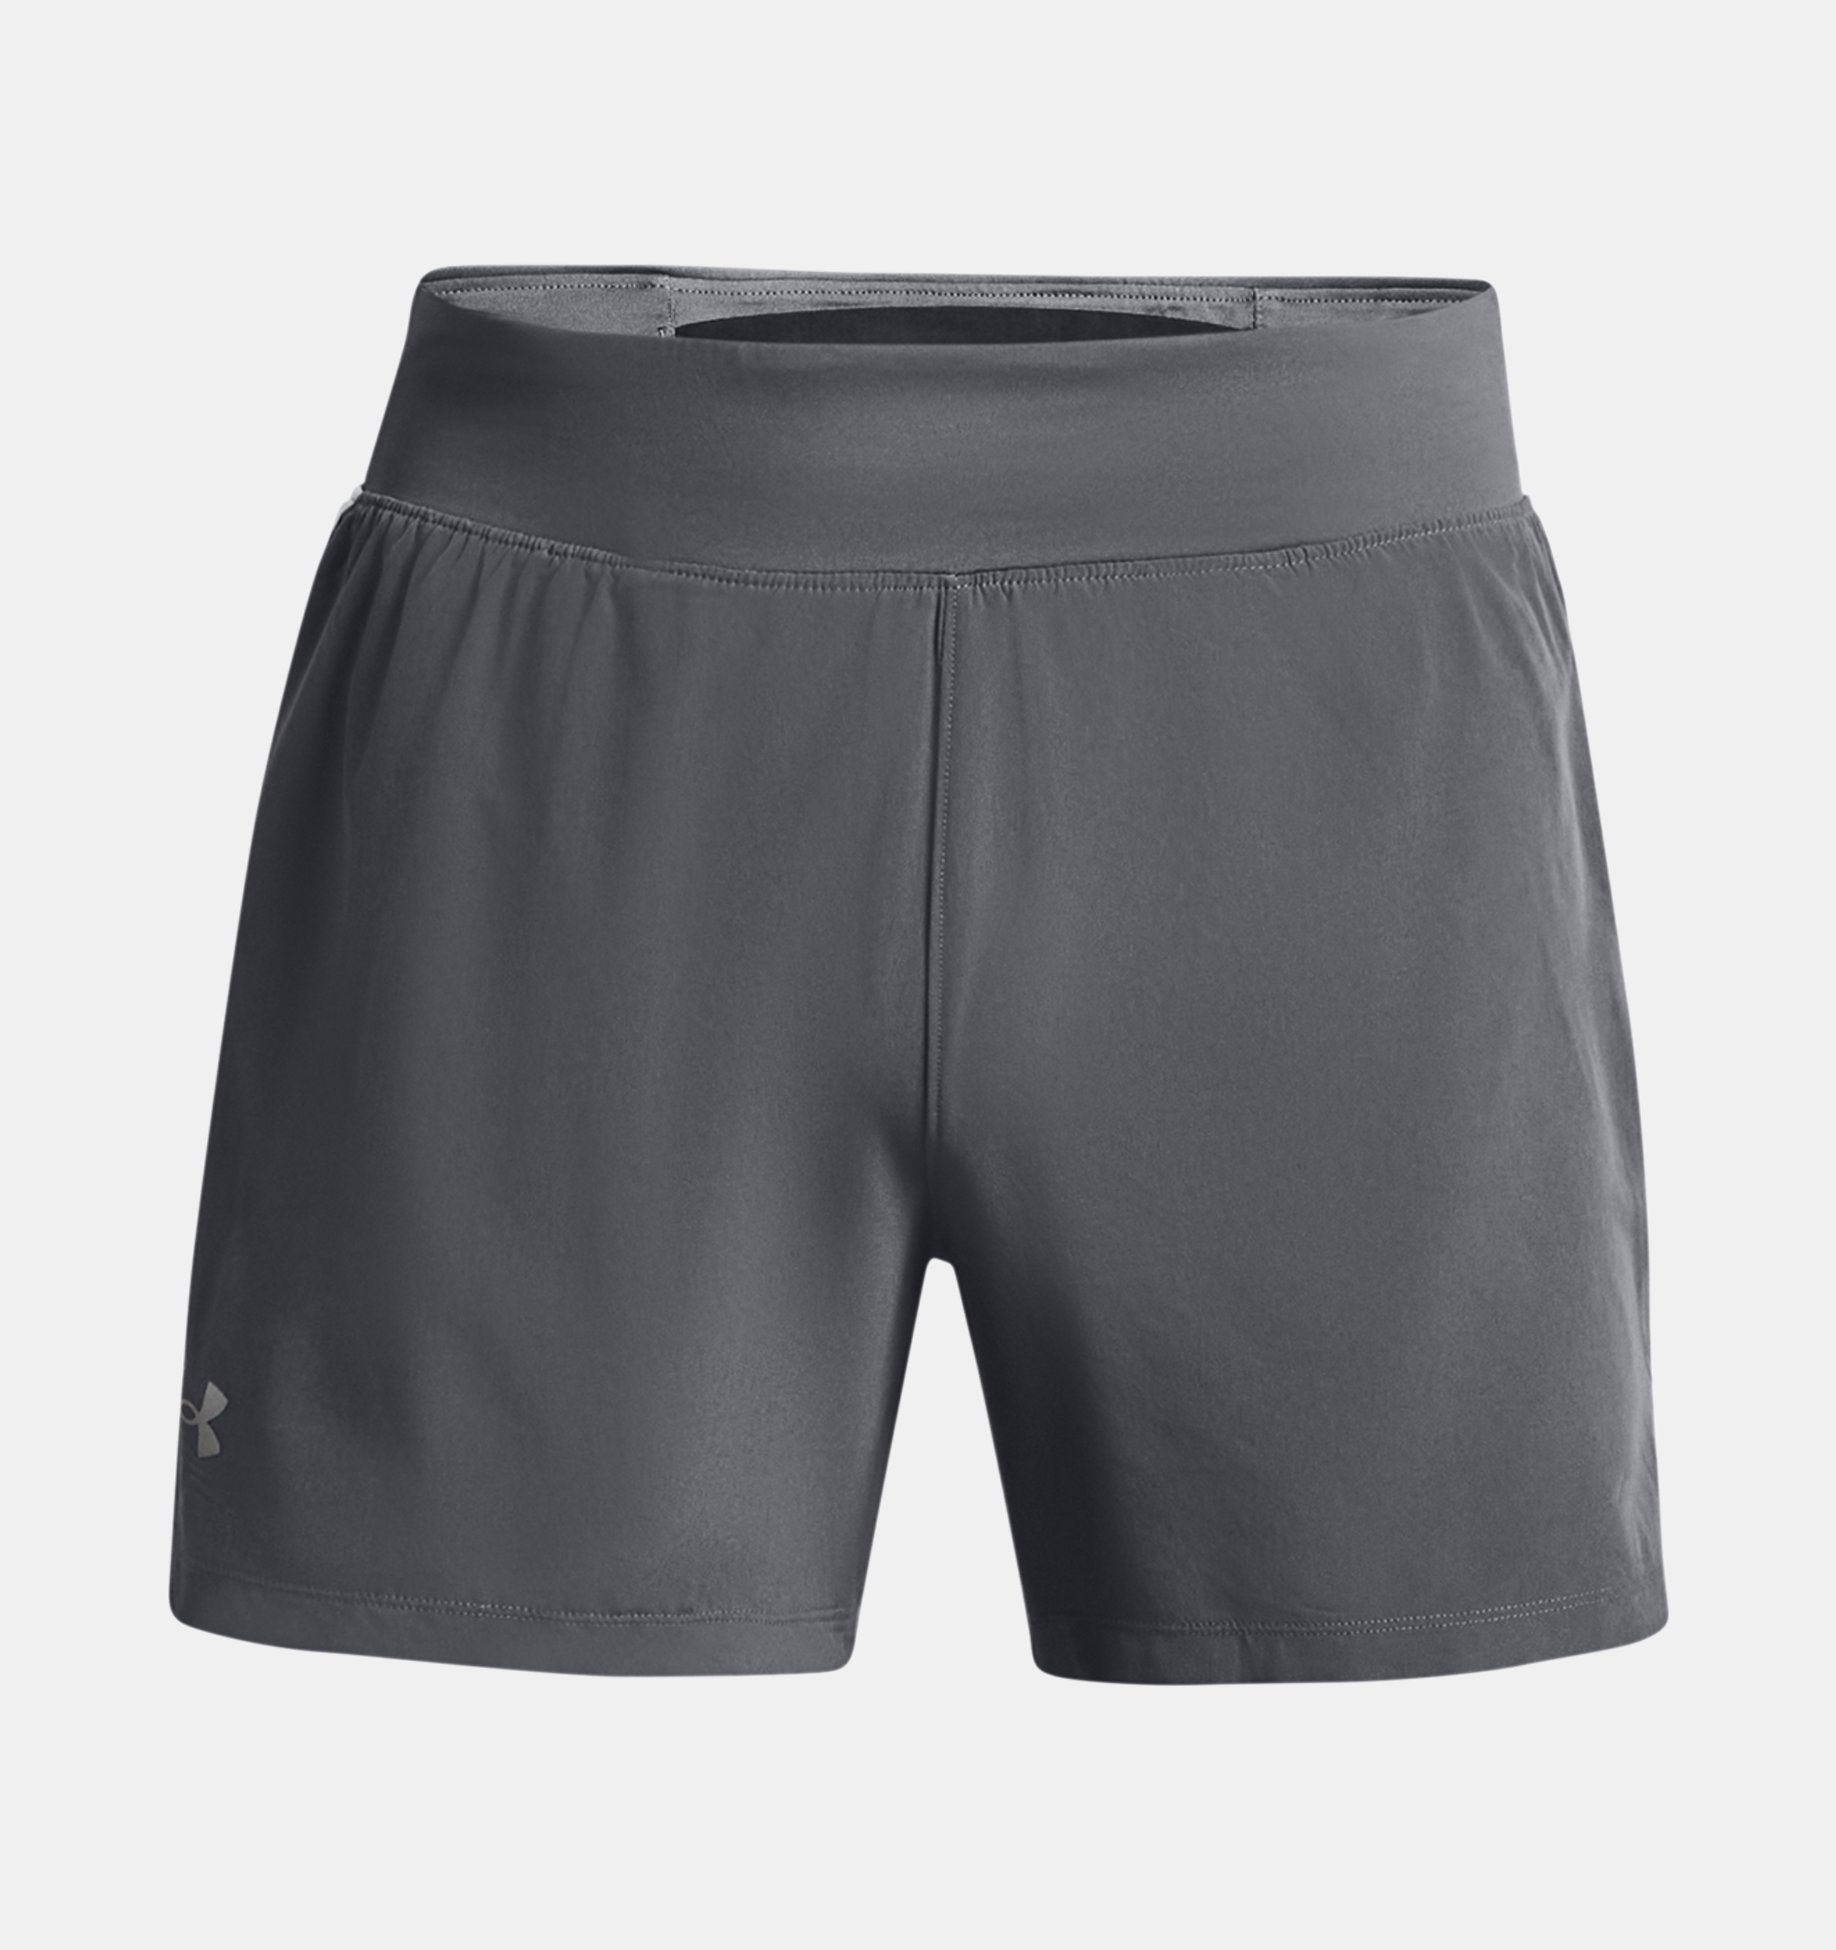 Under Armour Men's UA Speedpocket 5'' Shorts (Pitch Grey) $17.38 + Free Shipping w/ Shoprunner or on $50+